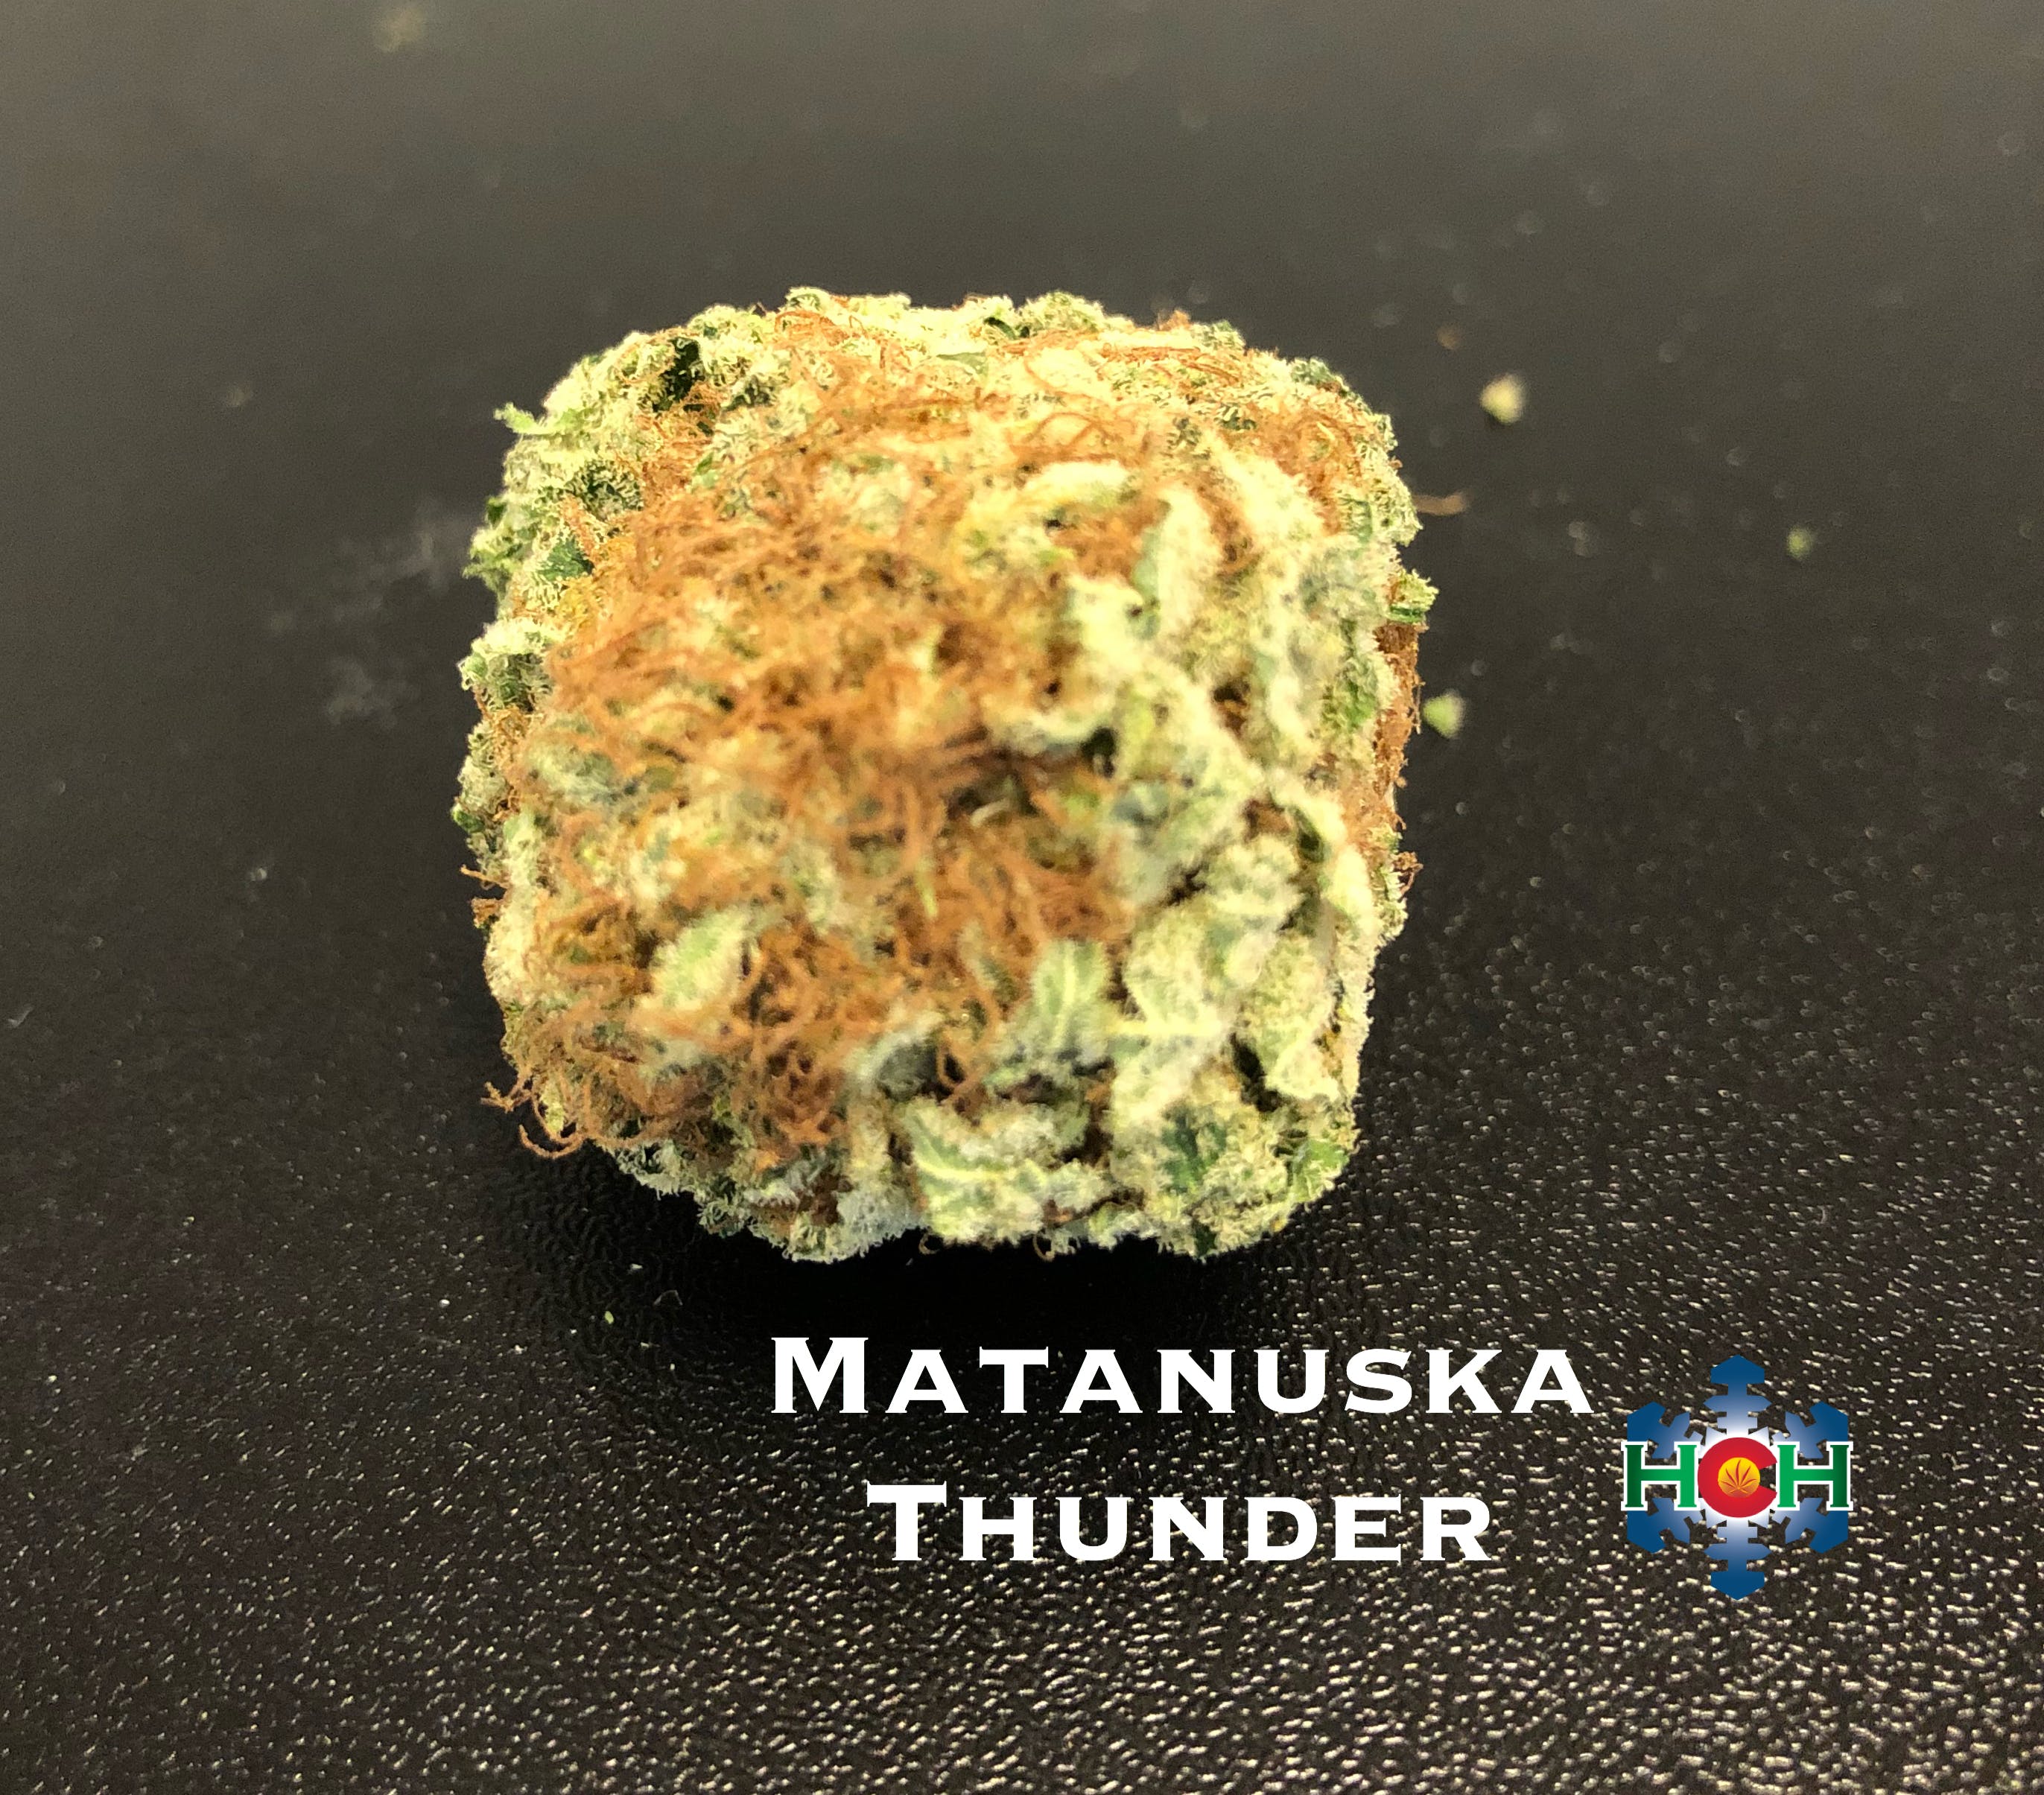 marijuana-dispensaries-1330-w-garden-of-the-gods-rd-colorado-springs-matanuska-thunder